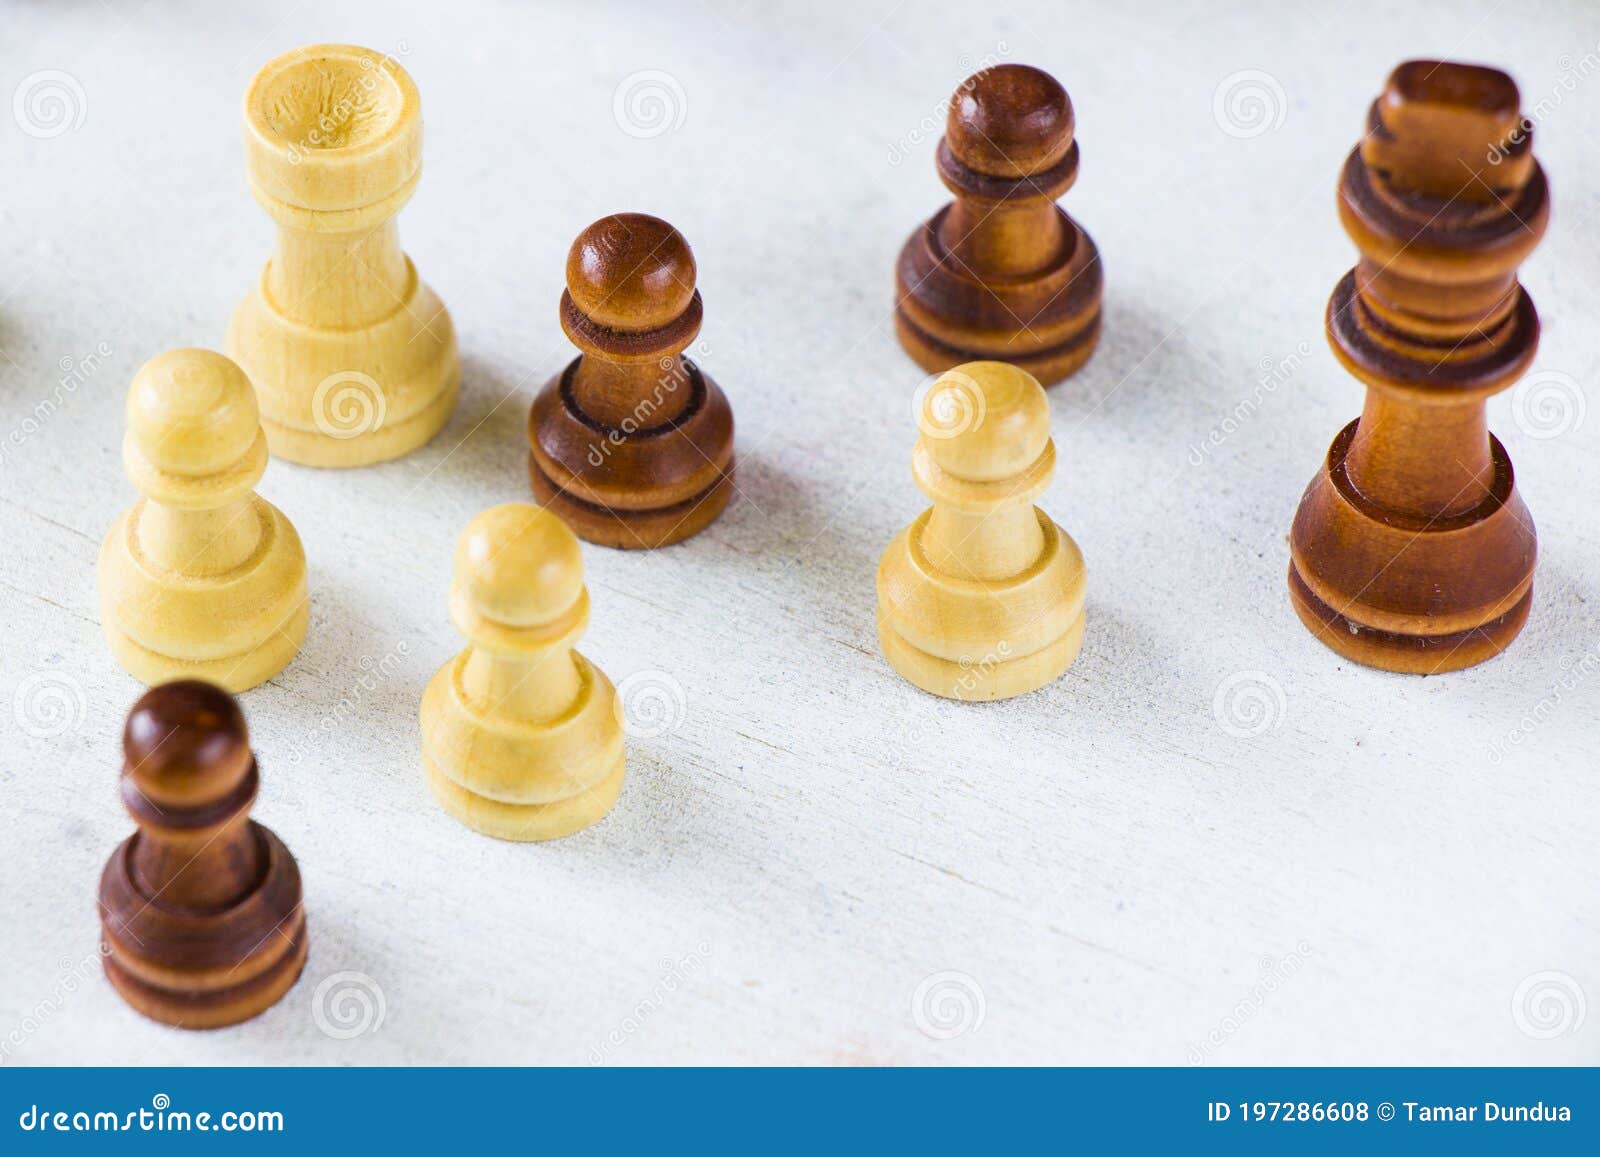 Xeque-mate: The Noite traz um dos maiores jogadores de xadrez do